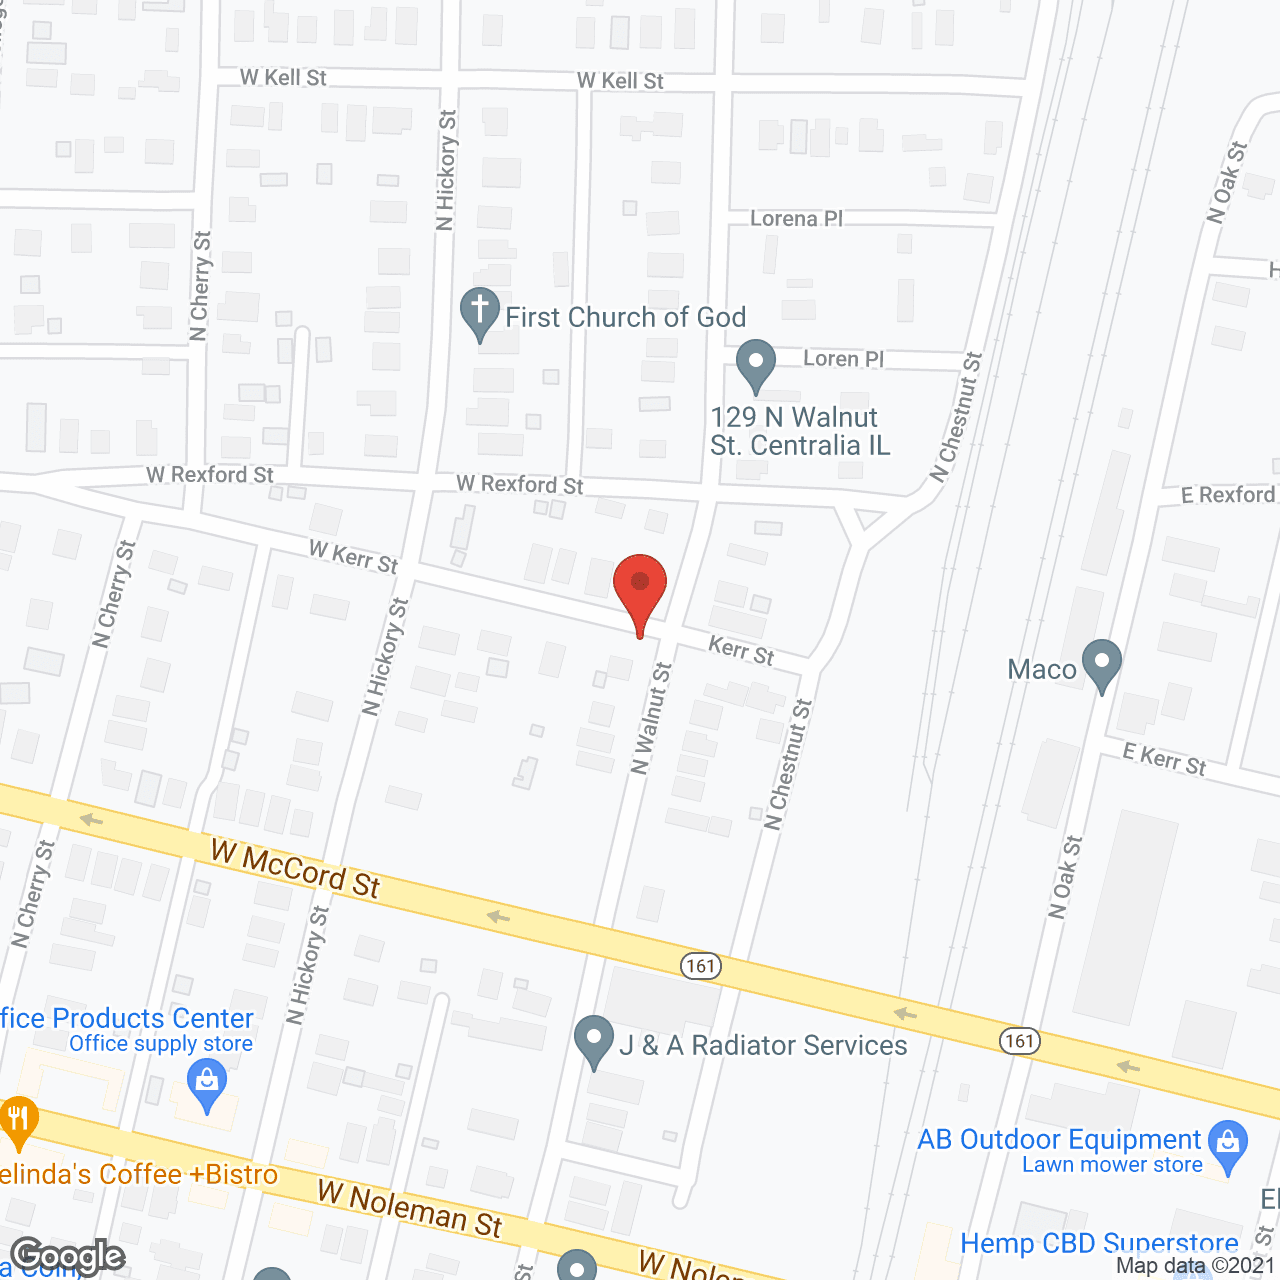 Cedarhurst of Centralia in google map